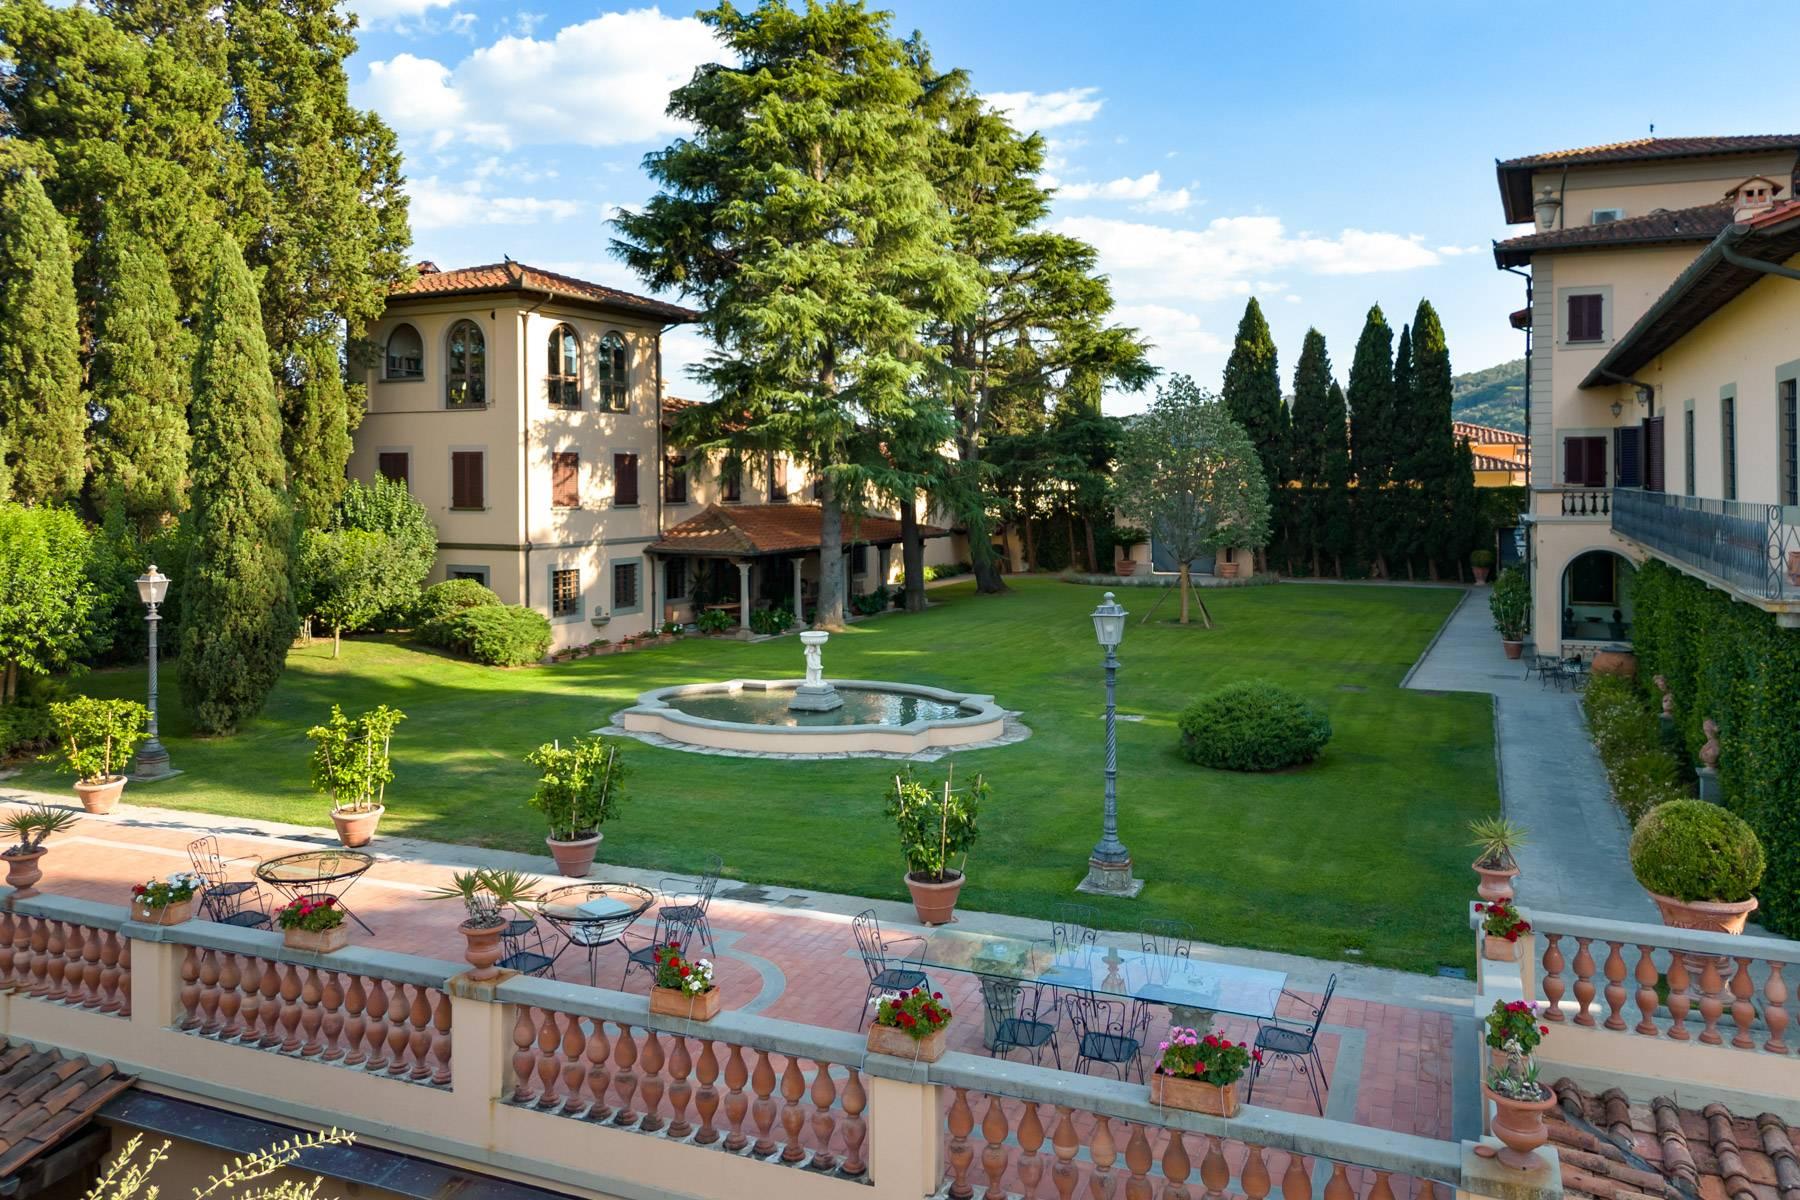 Apartment in a historic villa on the hills of Carmignano - 3